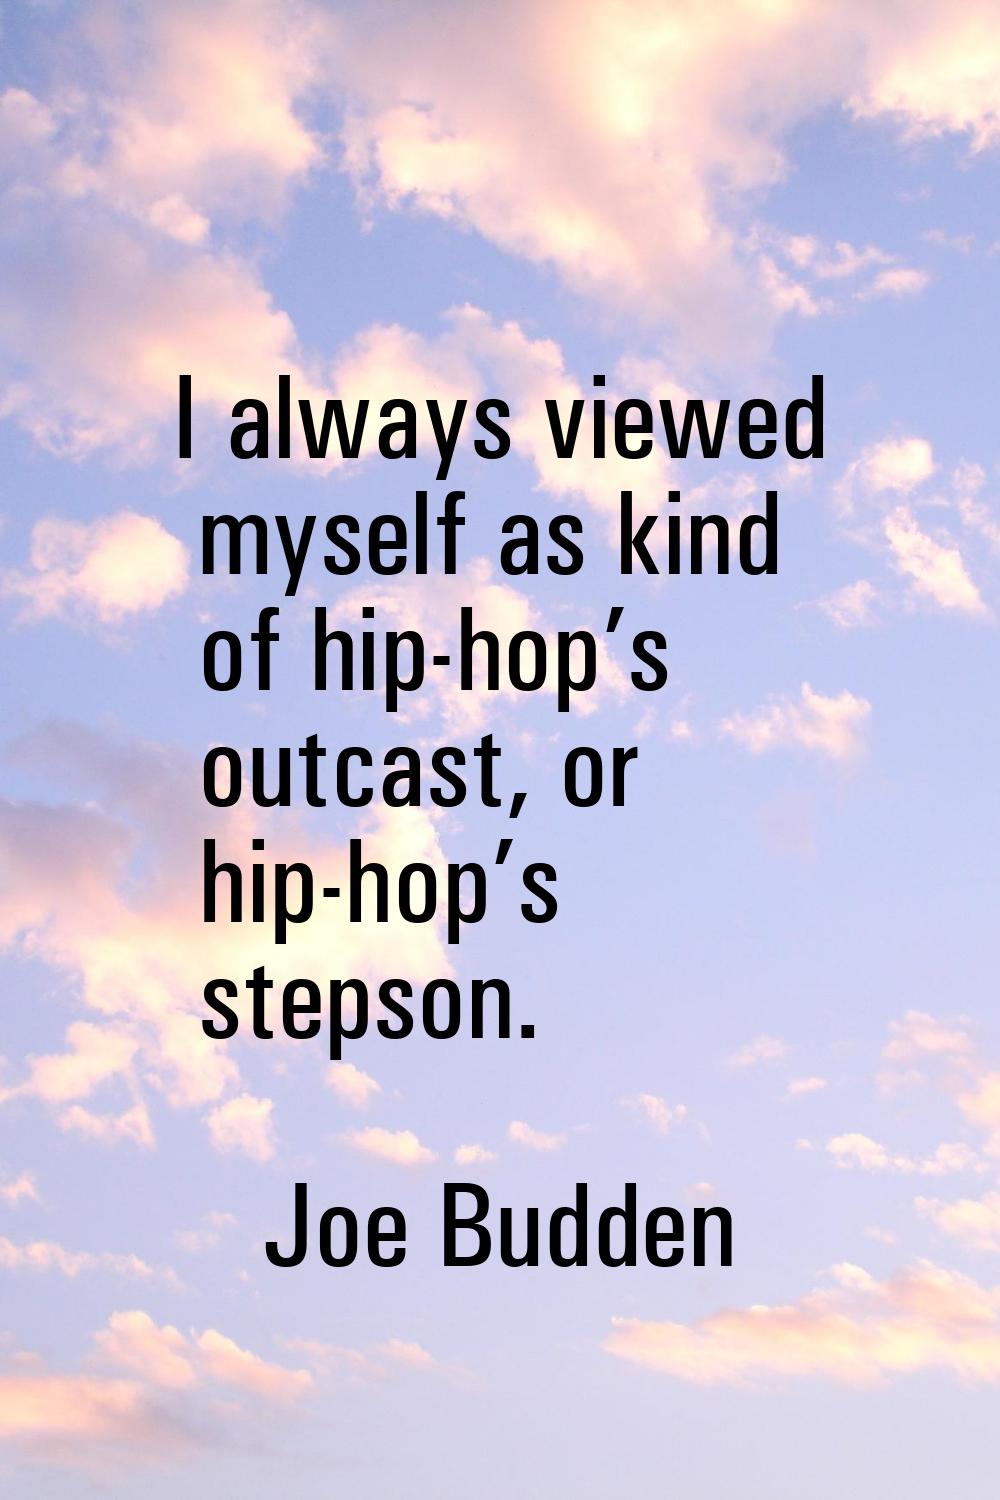 I always viewed myself as kind of hip-hop’s outcast, or hip-hop’s stepson.